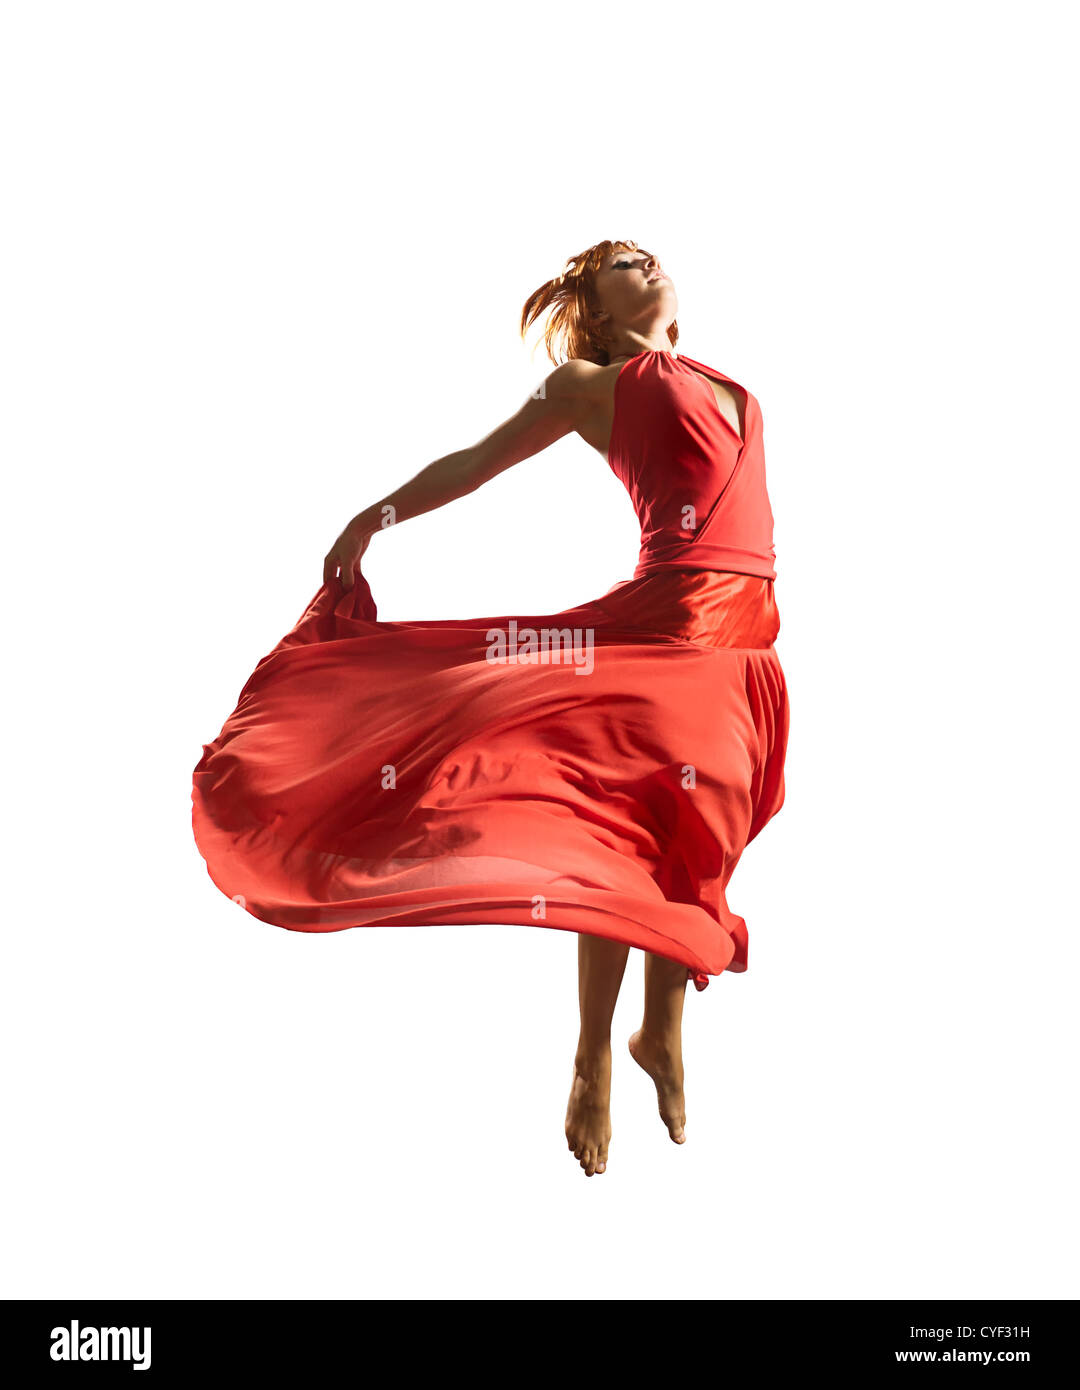 Merveilleuse jeune flying dancer wearing red dress Banque D'Images